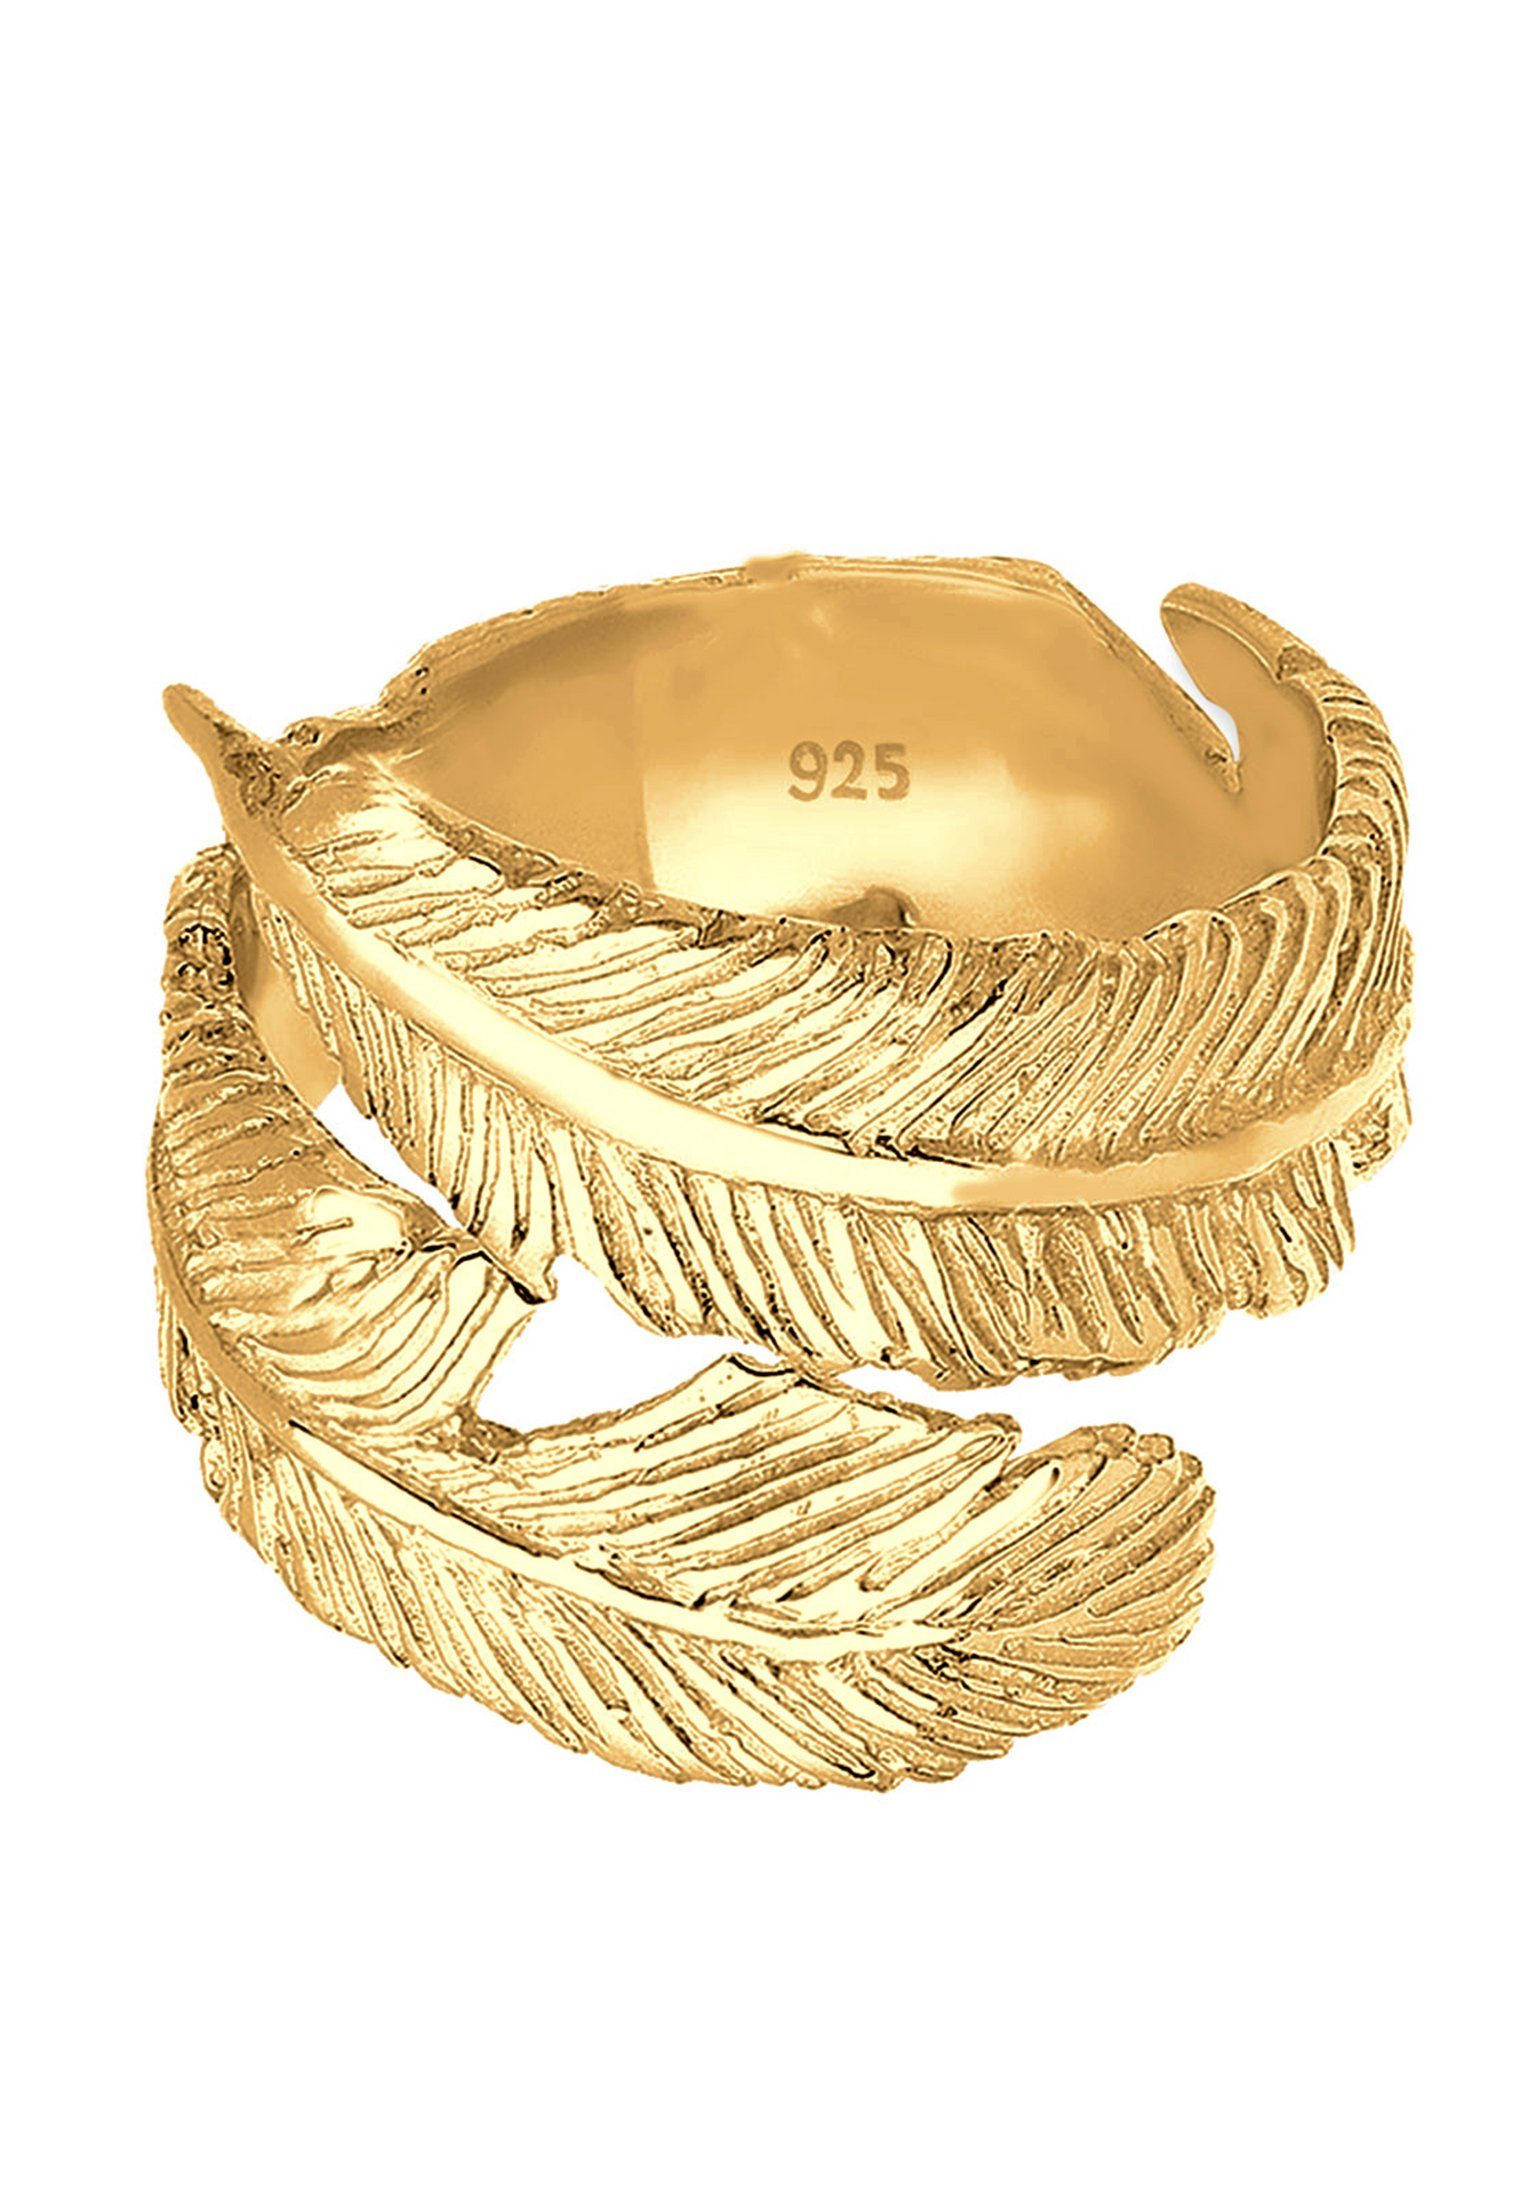 Feder Gold Elli Fingerring Design Offen Silber mit 925